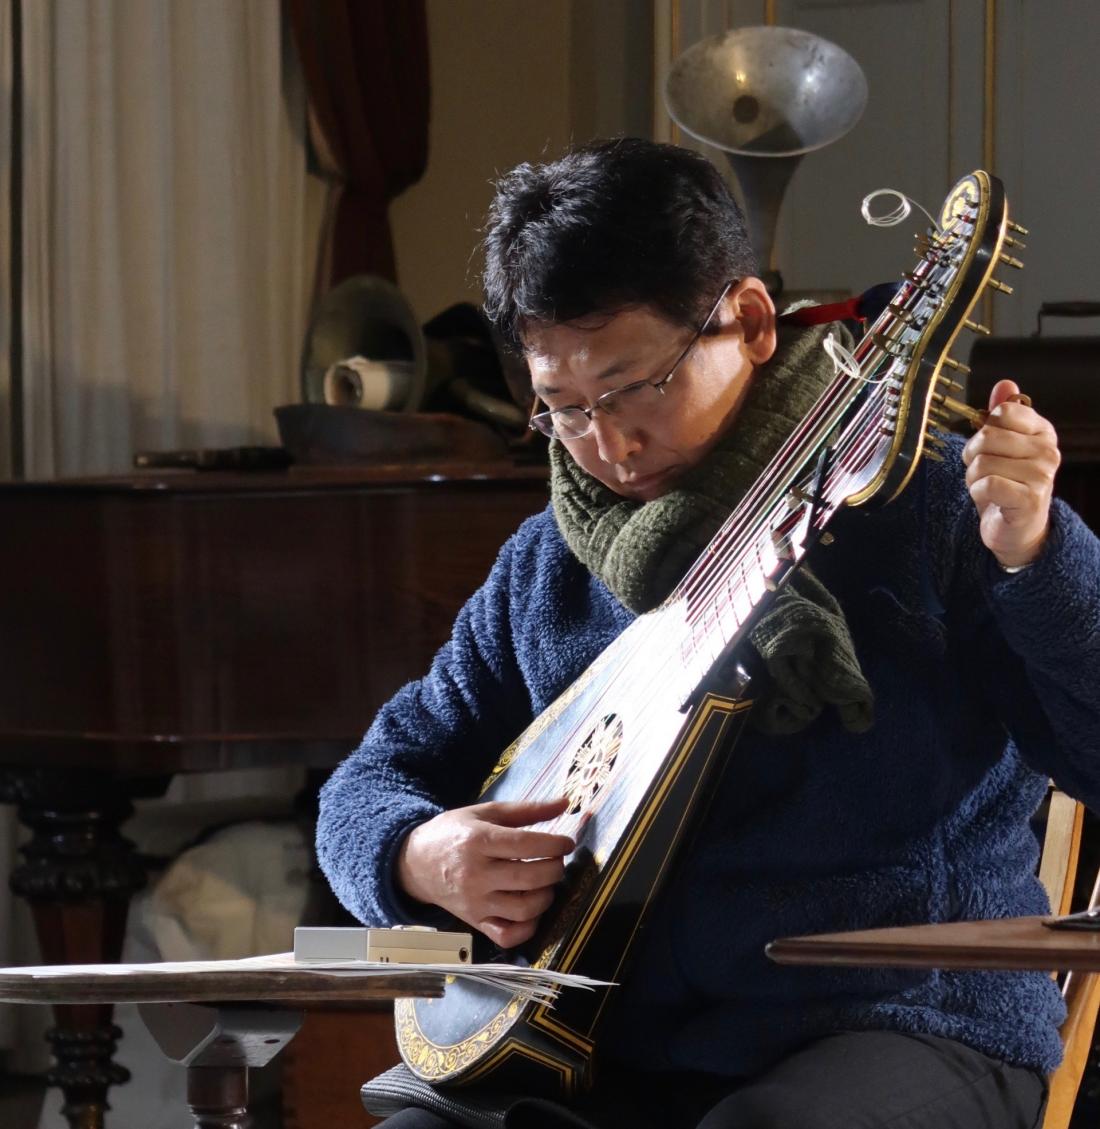 Taro Takeuchi plays the Erddig harp-lute